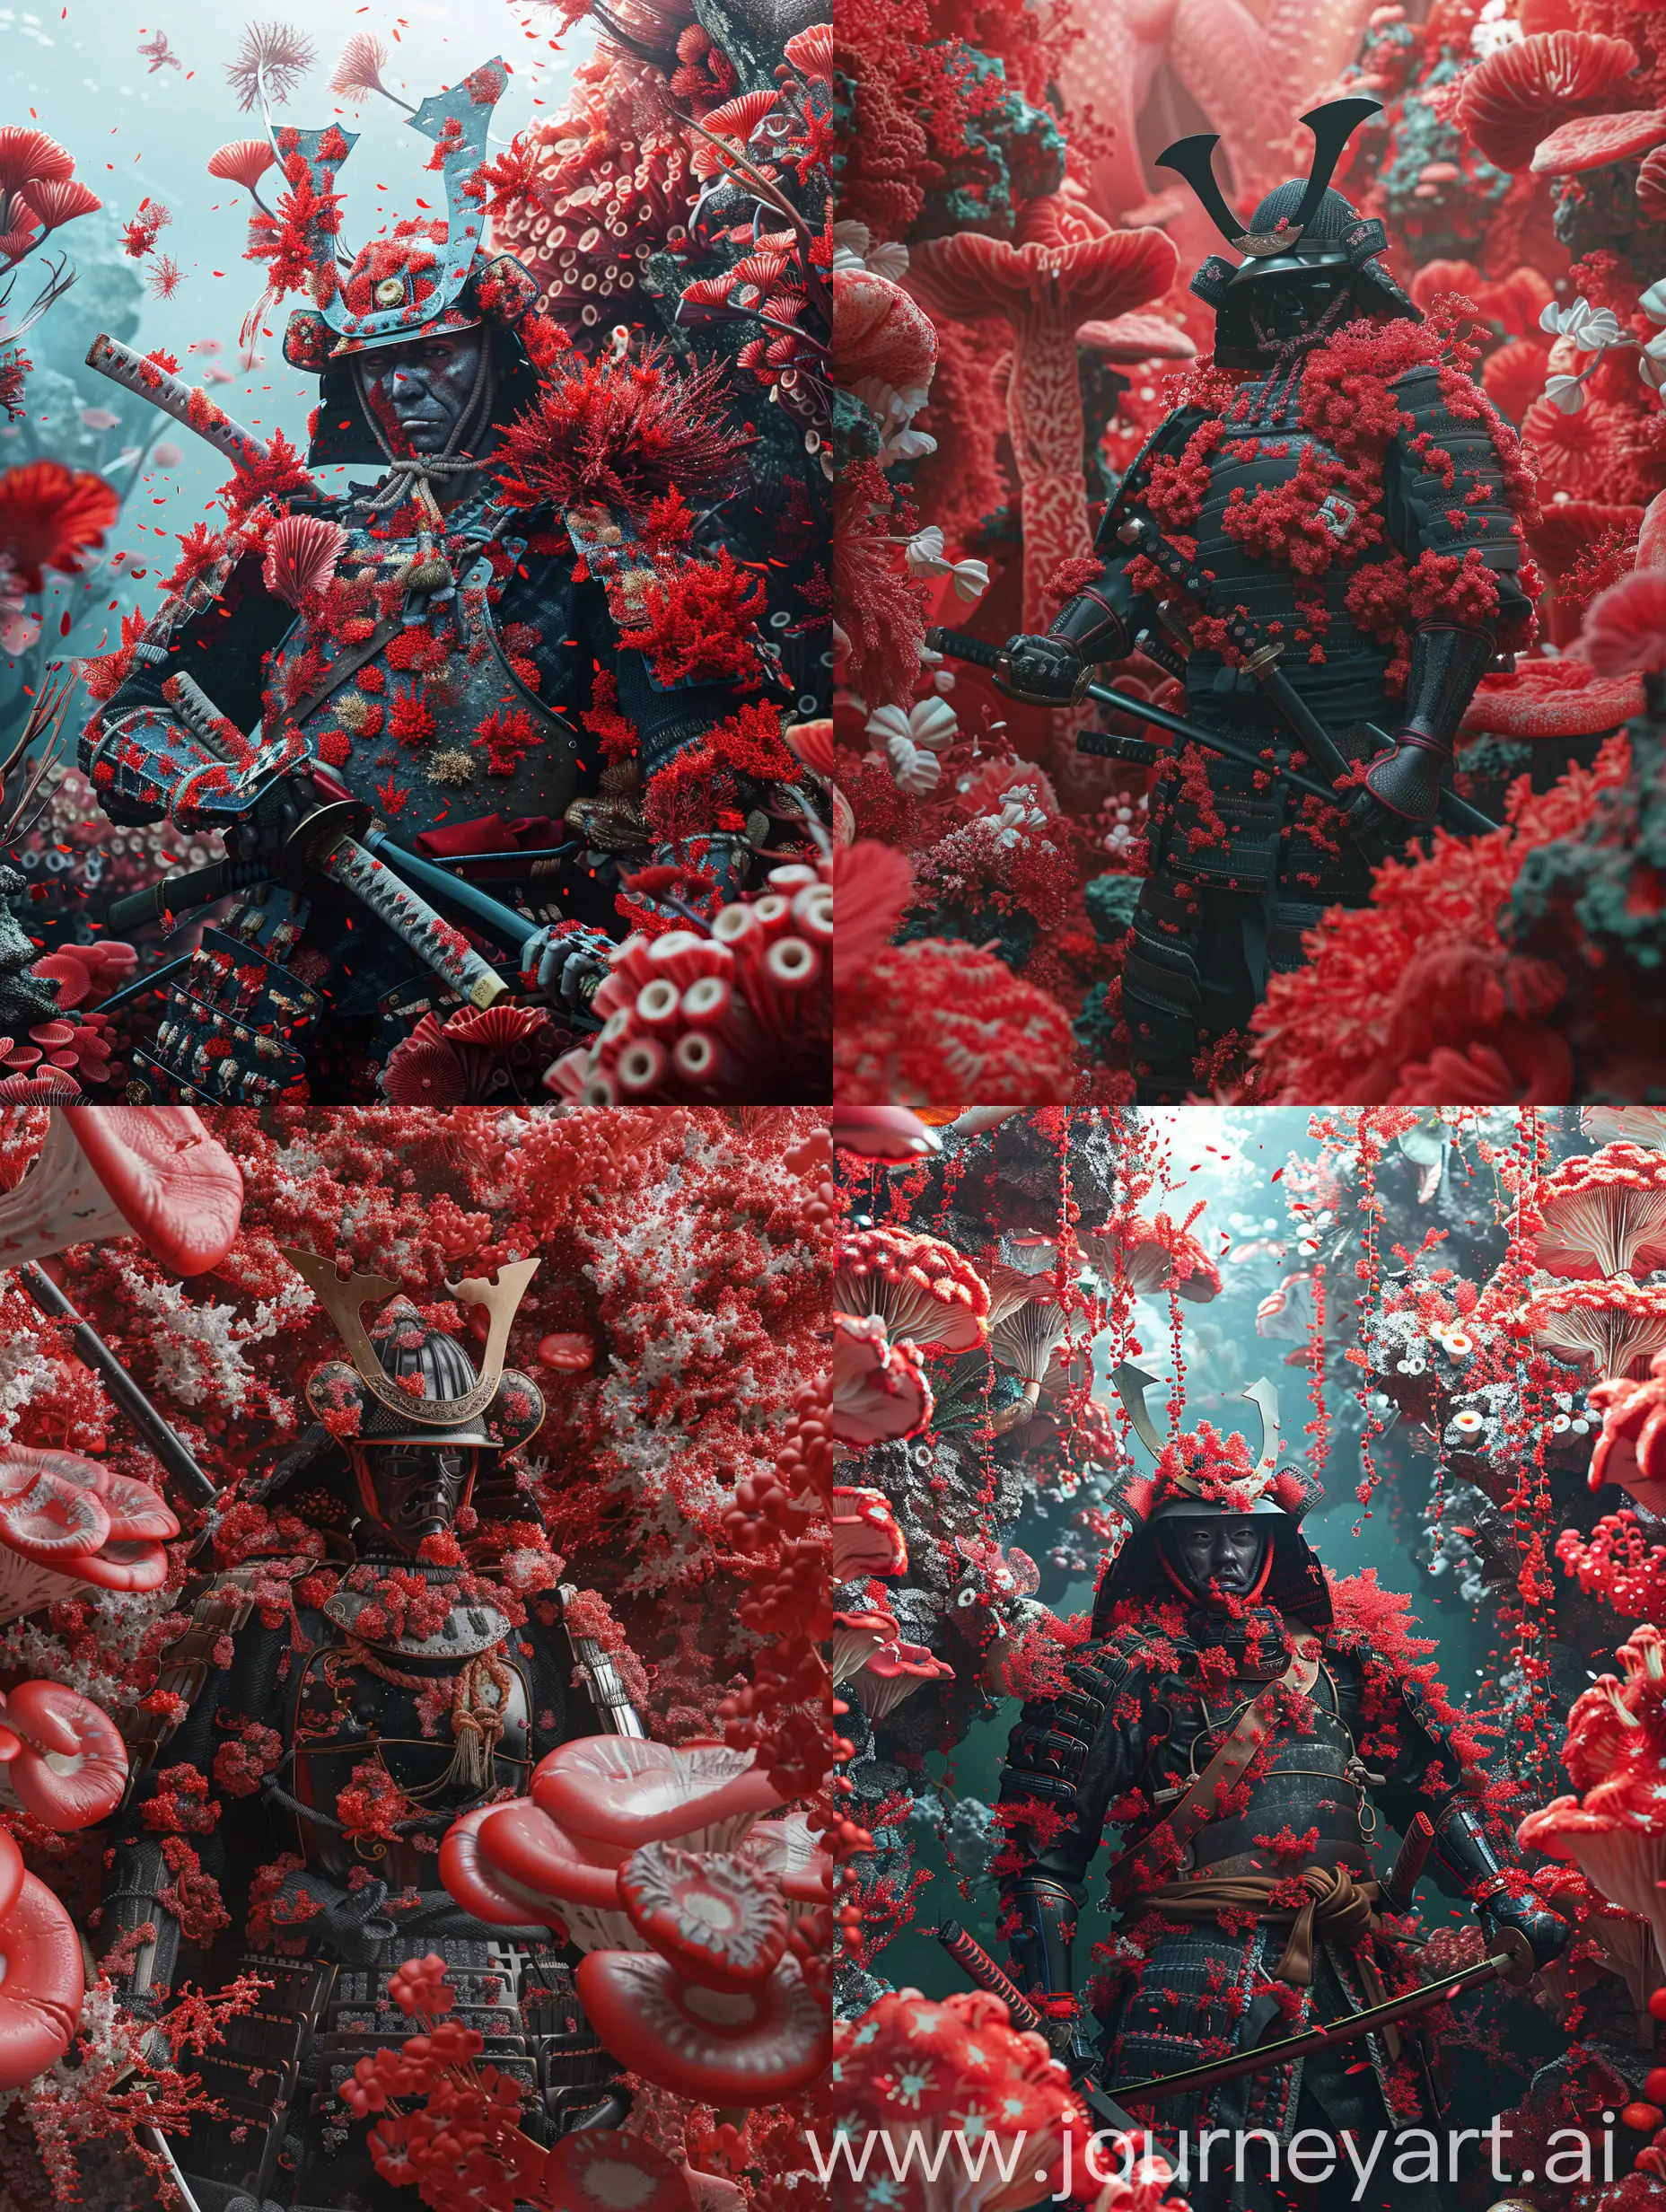 Hyper-Realistic-3D-Supreme-Brand-Samurai-Enveloped-in-Vibrant-Red-Coral-and-Fungi